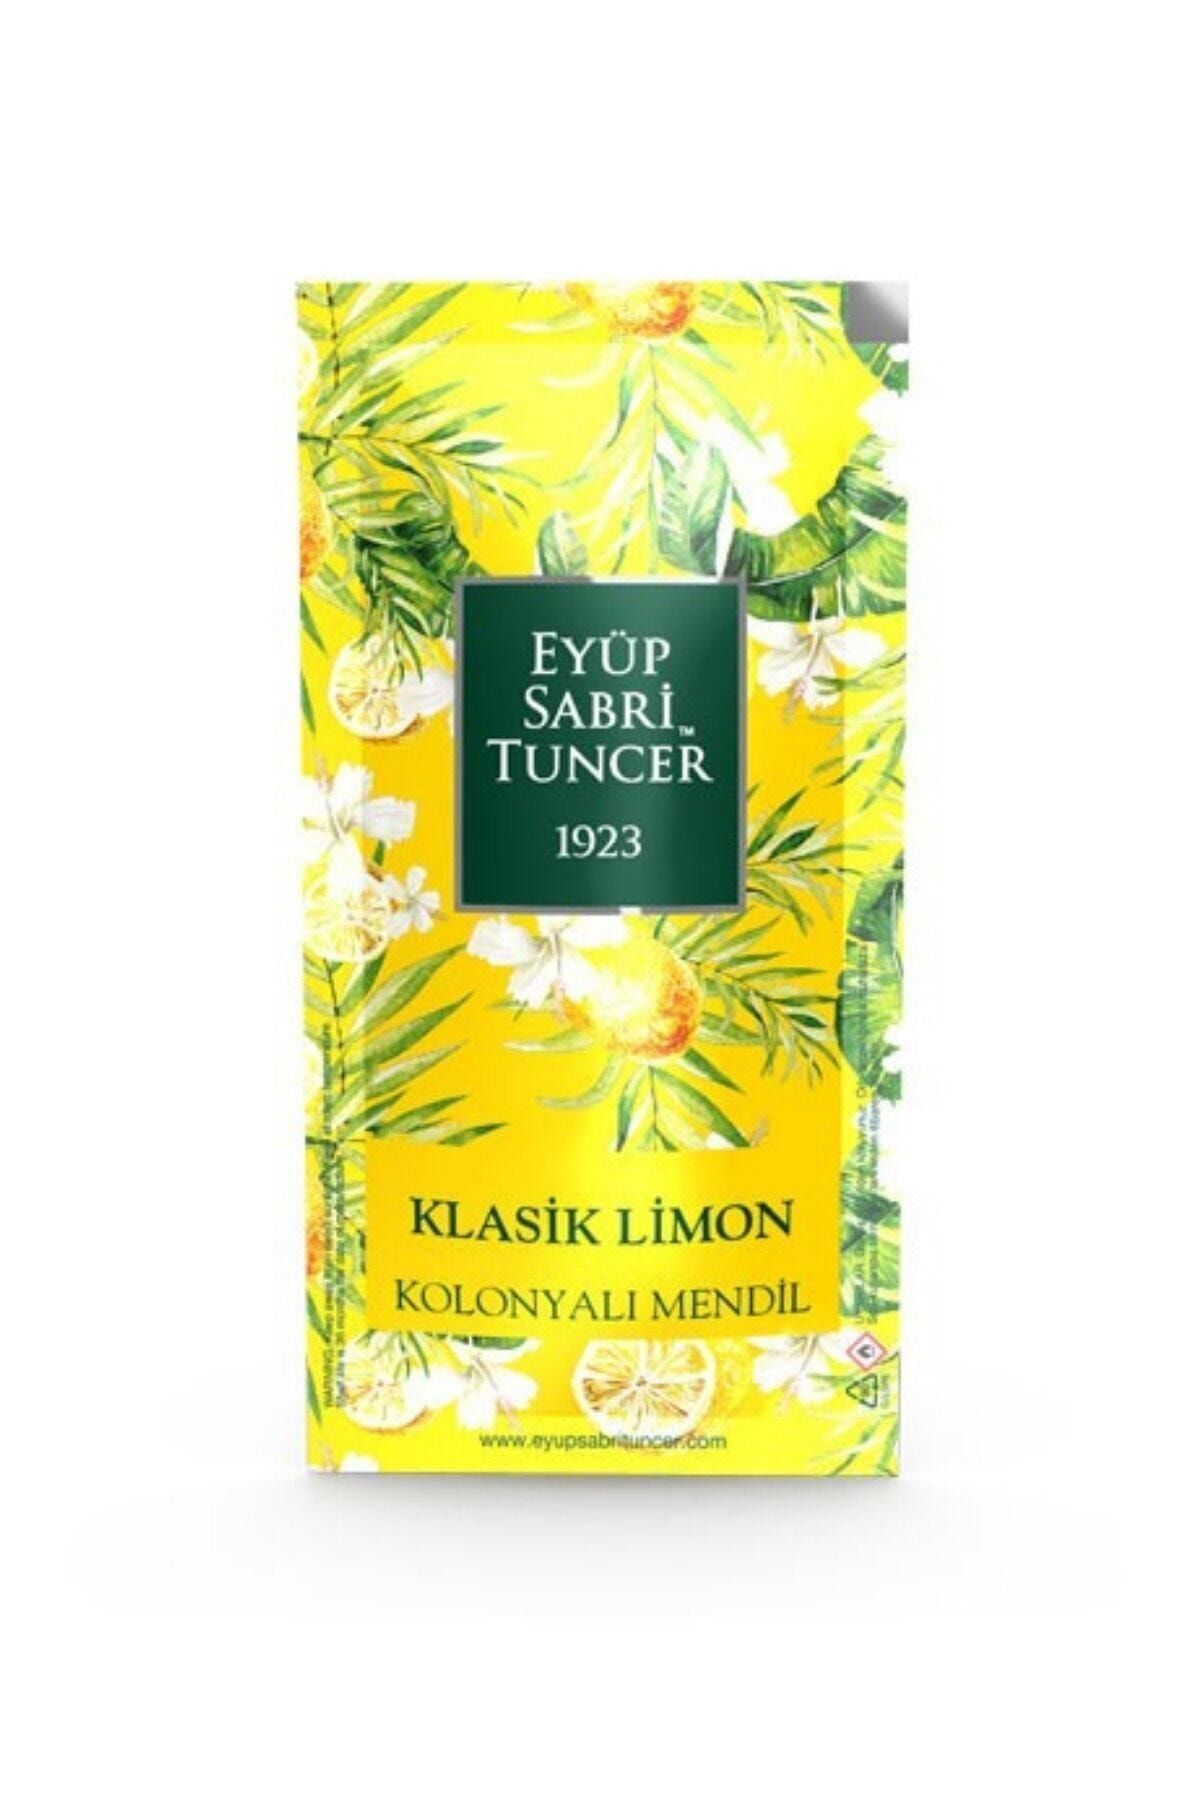 Eyüp Sabri Tuncer Klasik Limon Kolonyalı Mendil Küçük 150 Li Paket